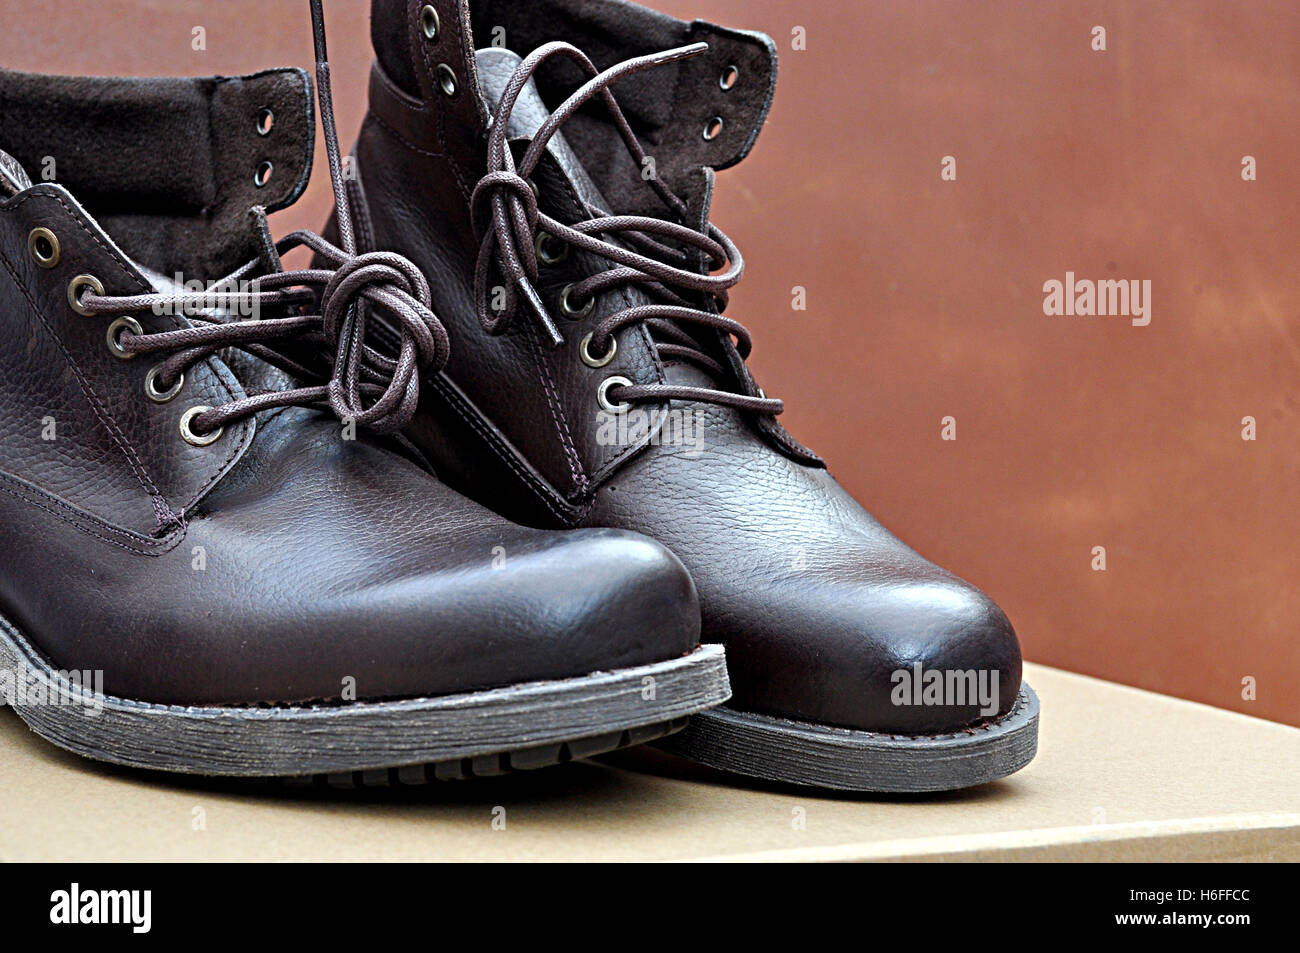 new boots Stock Photo - Alamy